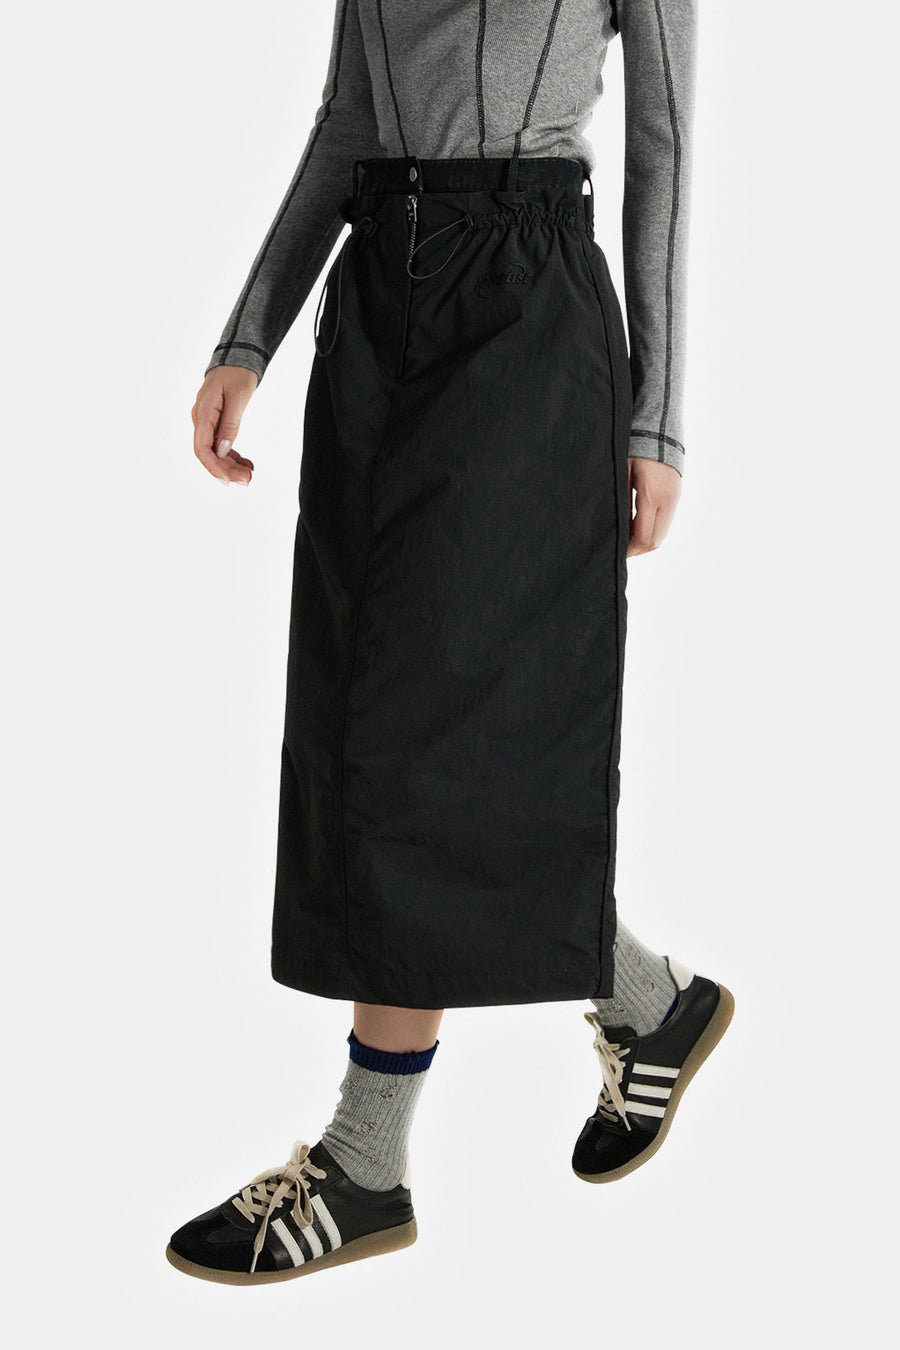 CHUU Simple Drawstring Long Skirt